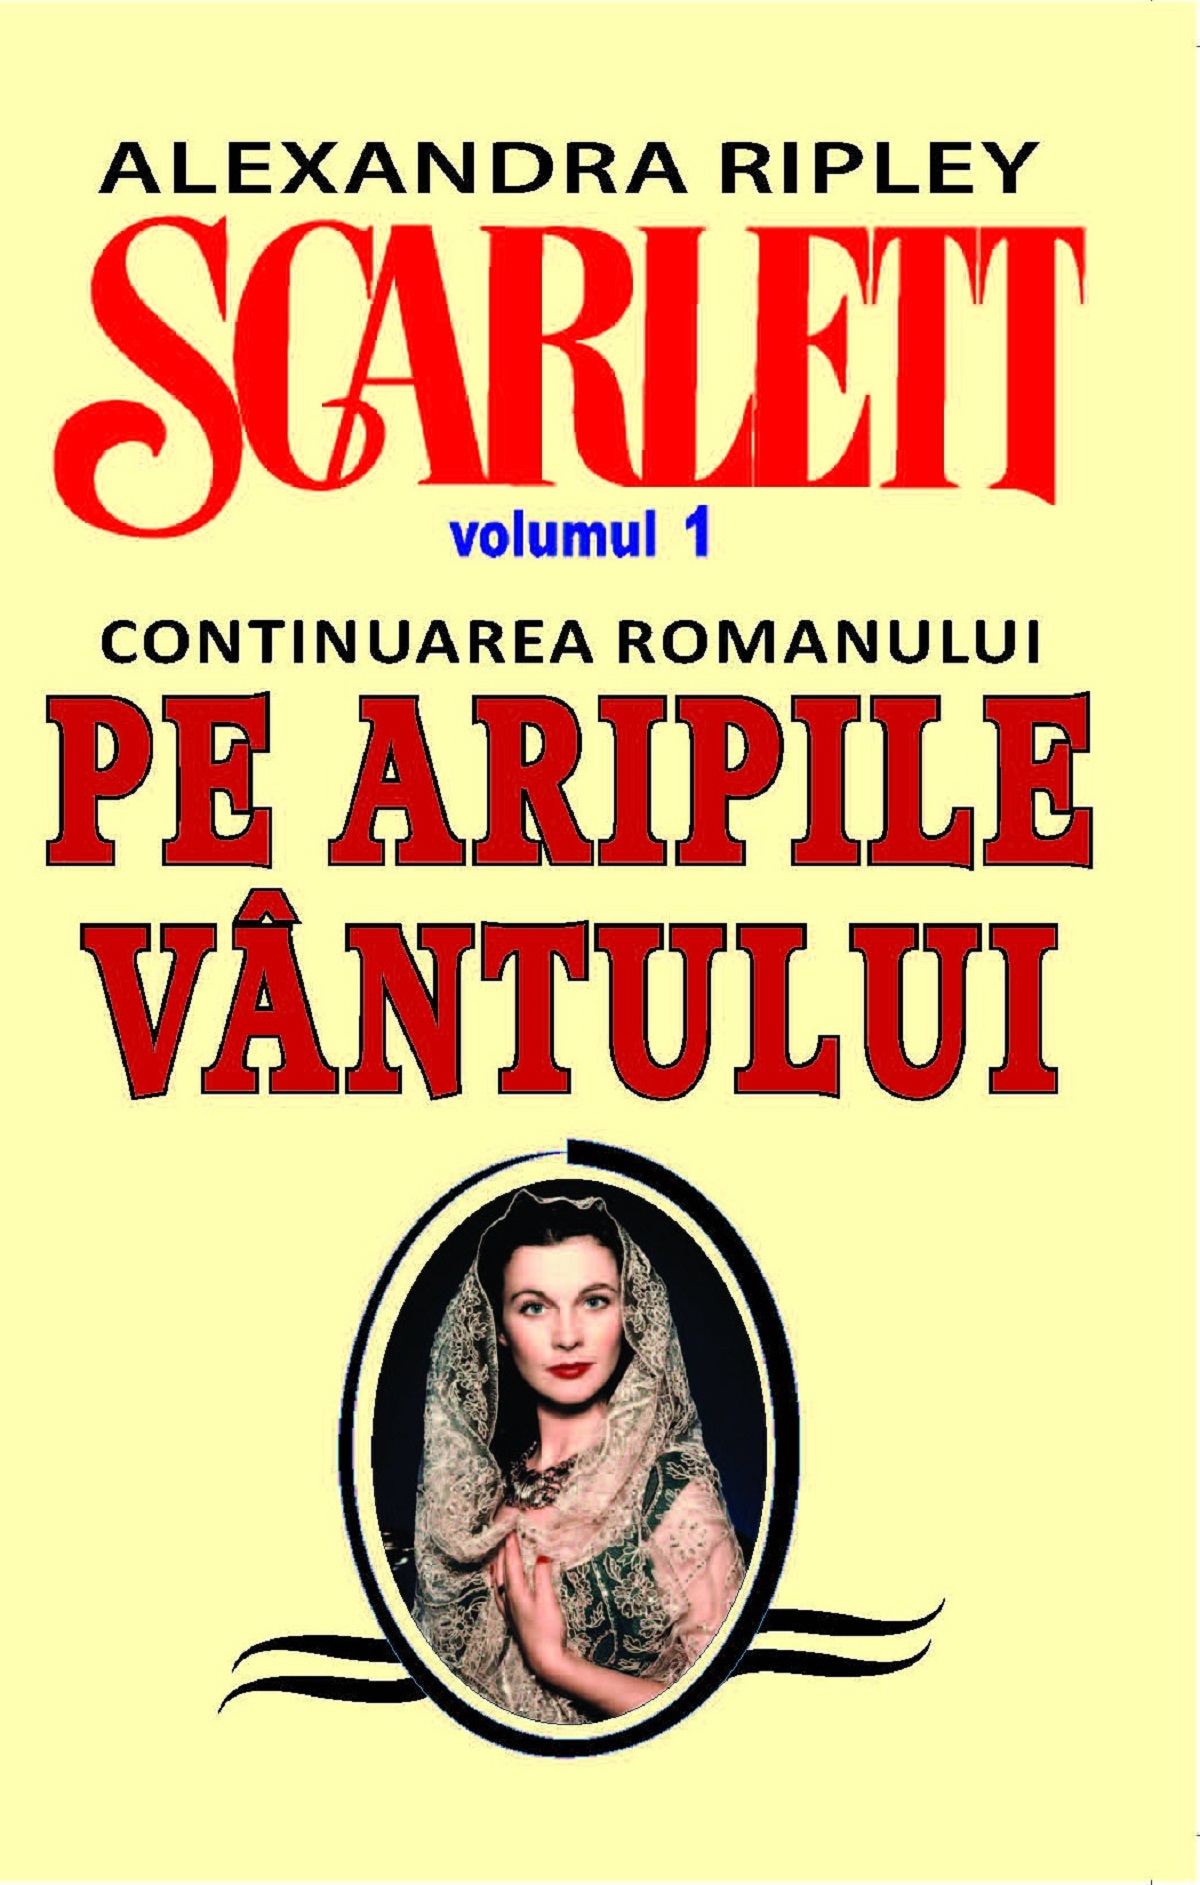 Scarlett Vol.1 - Alexandra Ripley